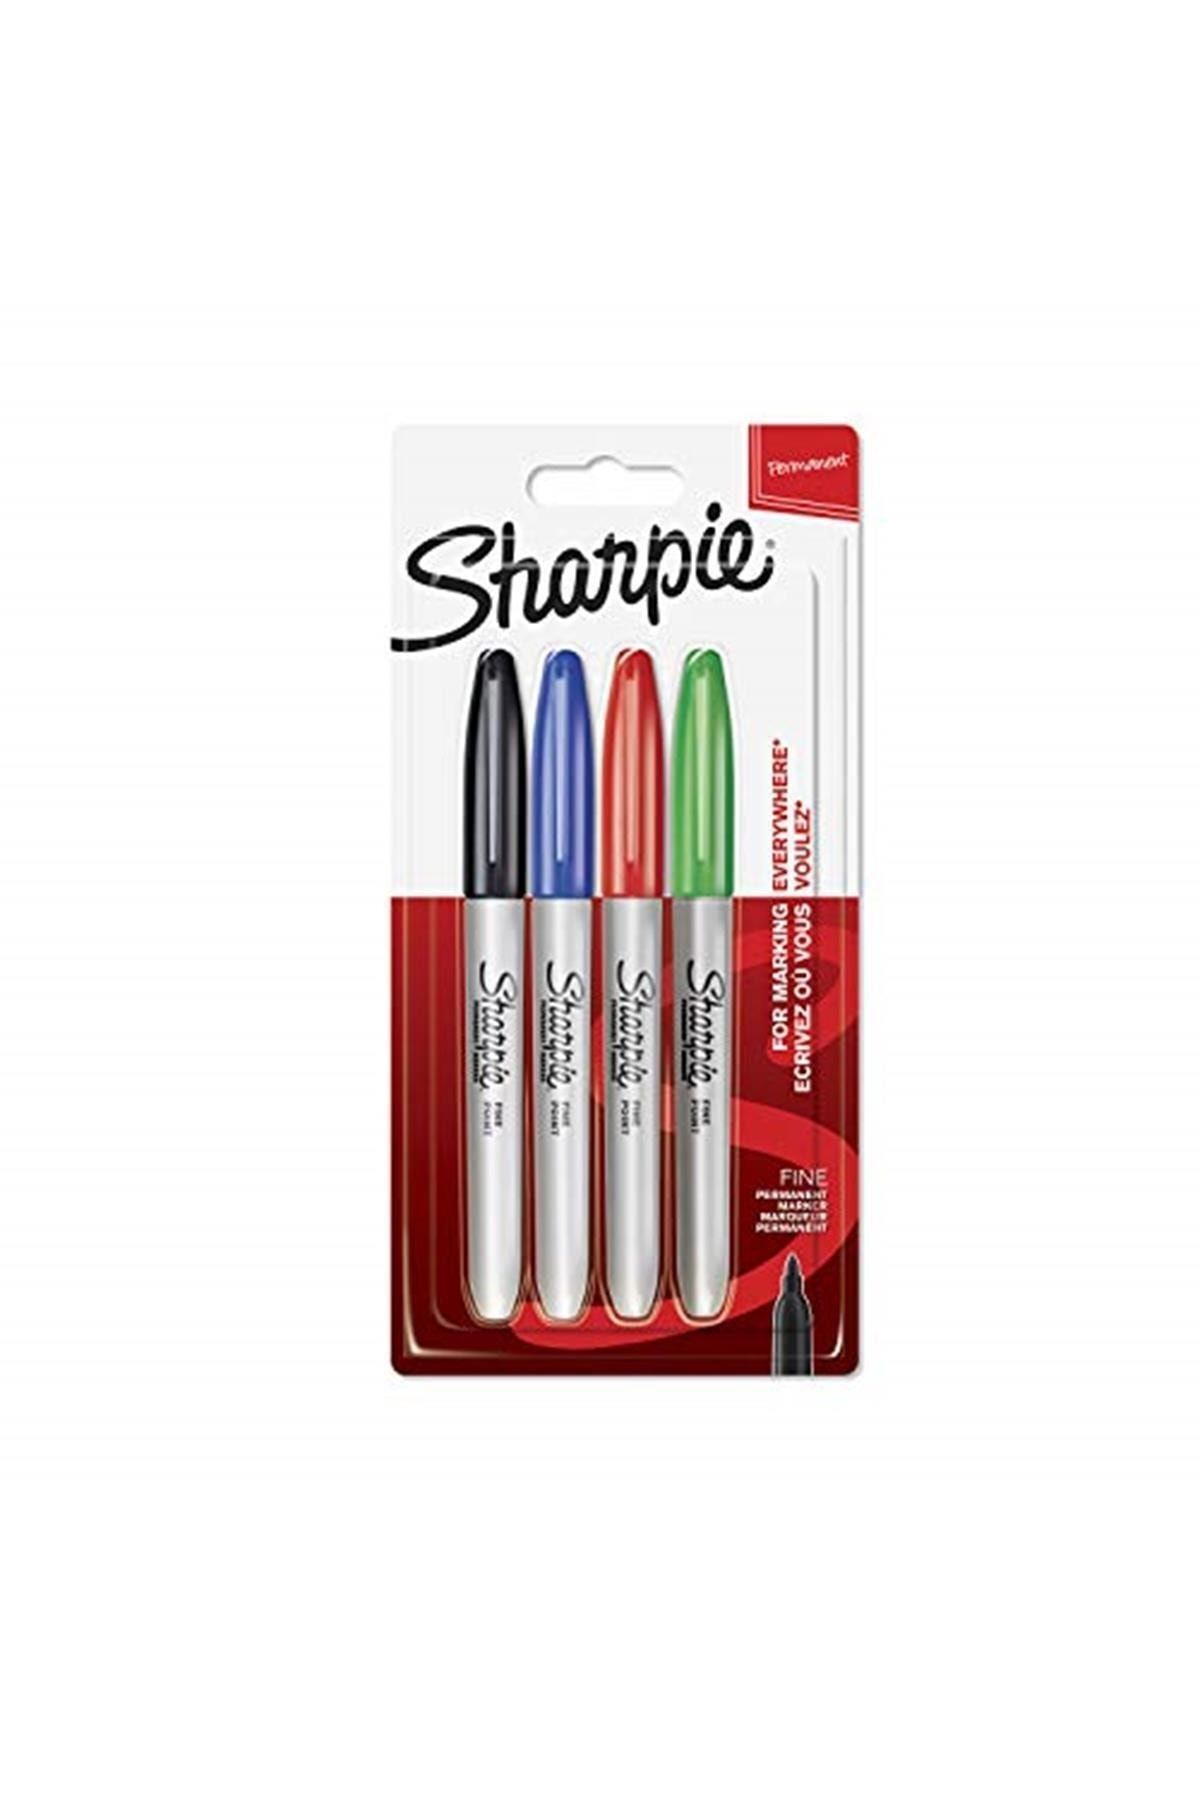 Sharpie Marka: Kalıcı Keçe Kalem, Ince Uçlu. 4 Adet Kategori: Uçlu Kalem